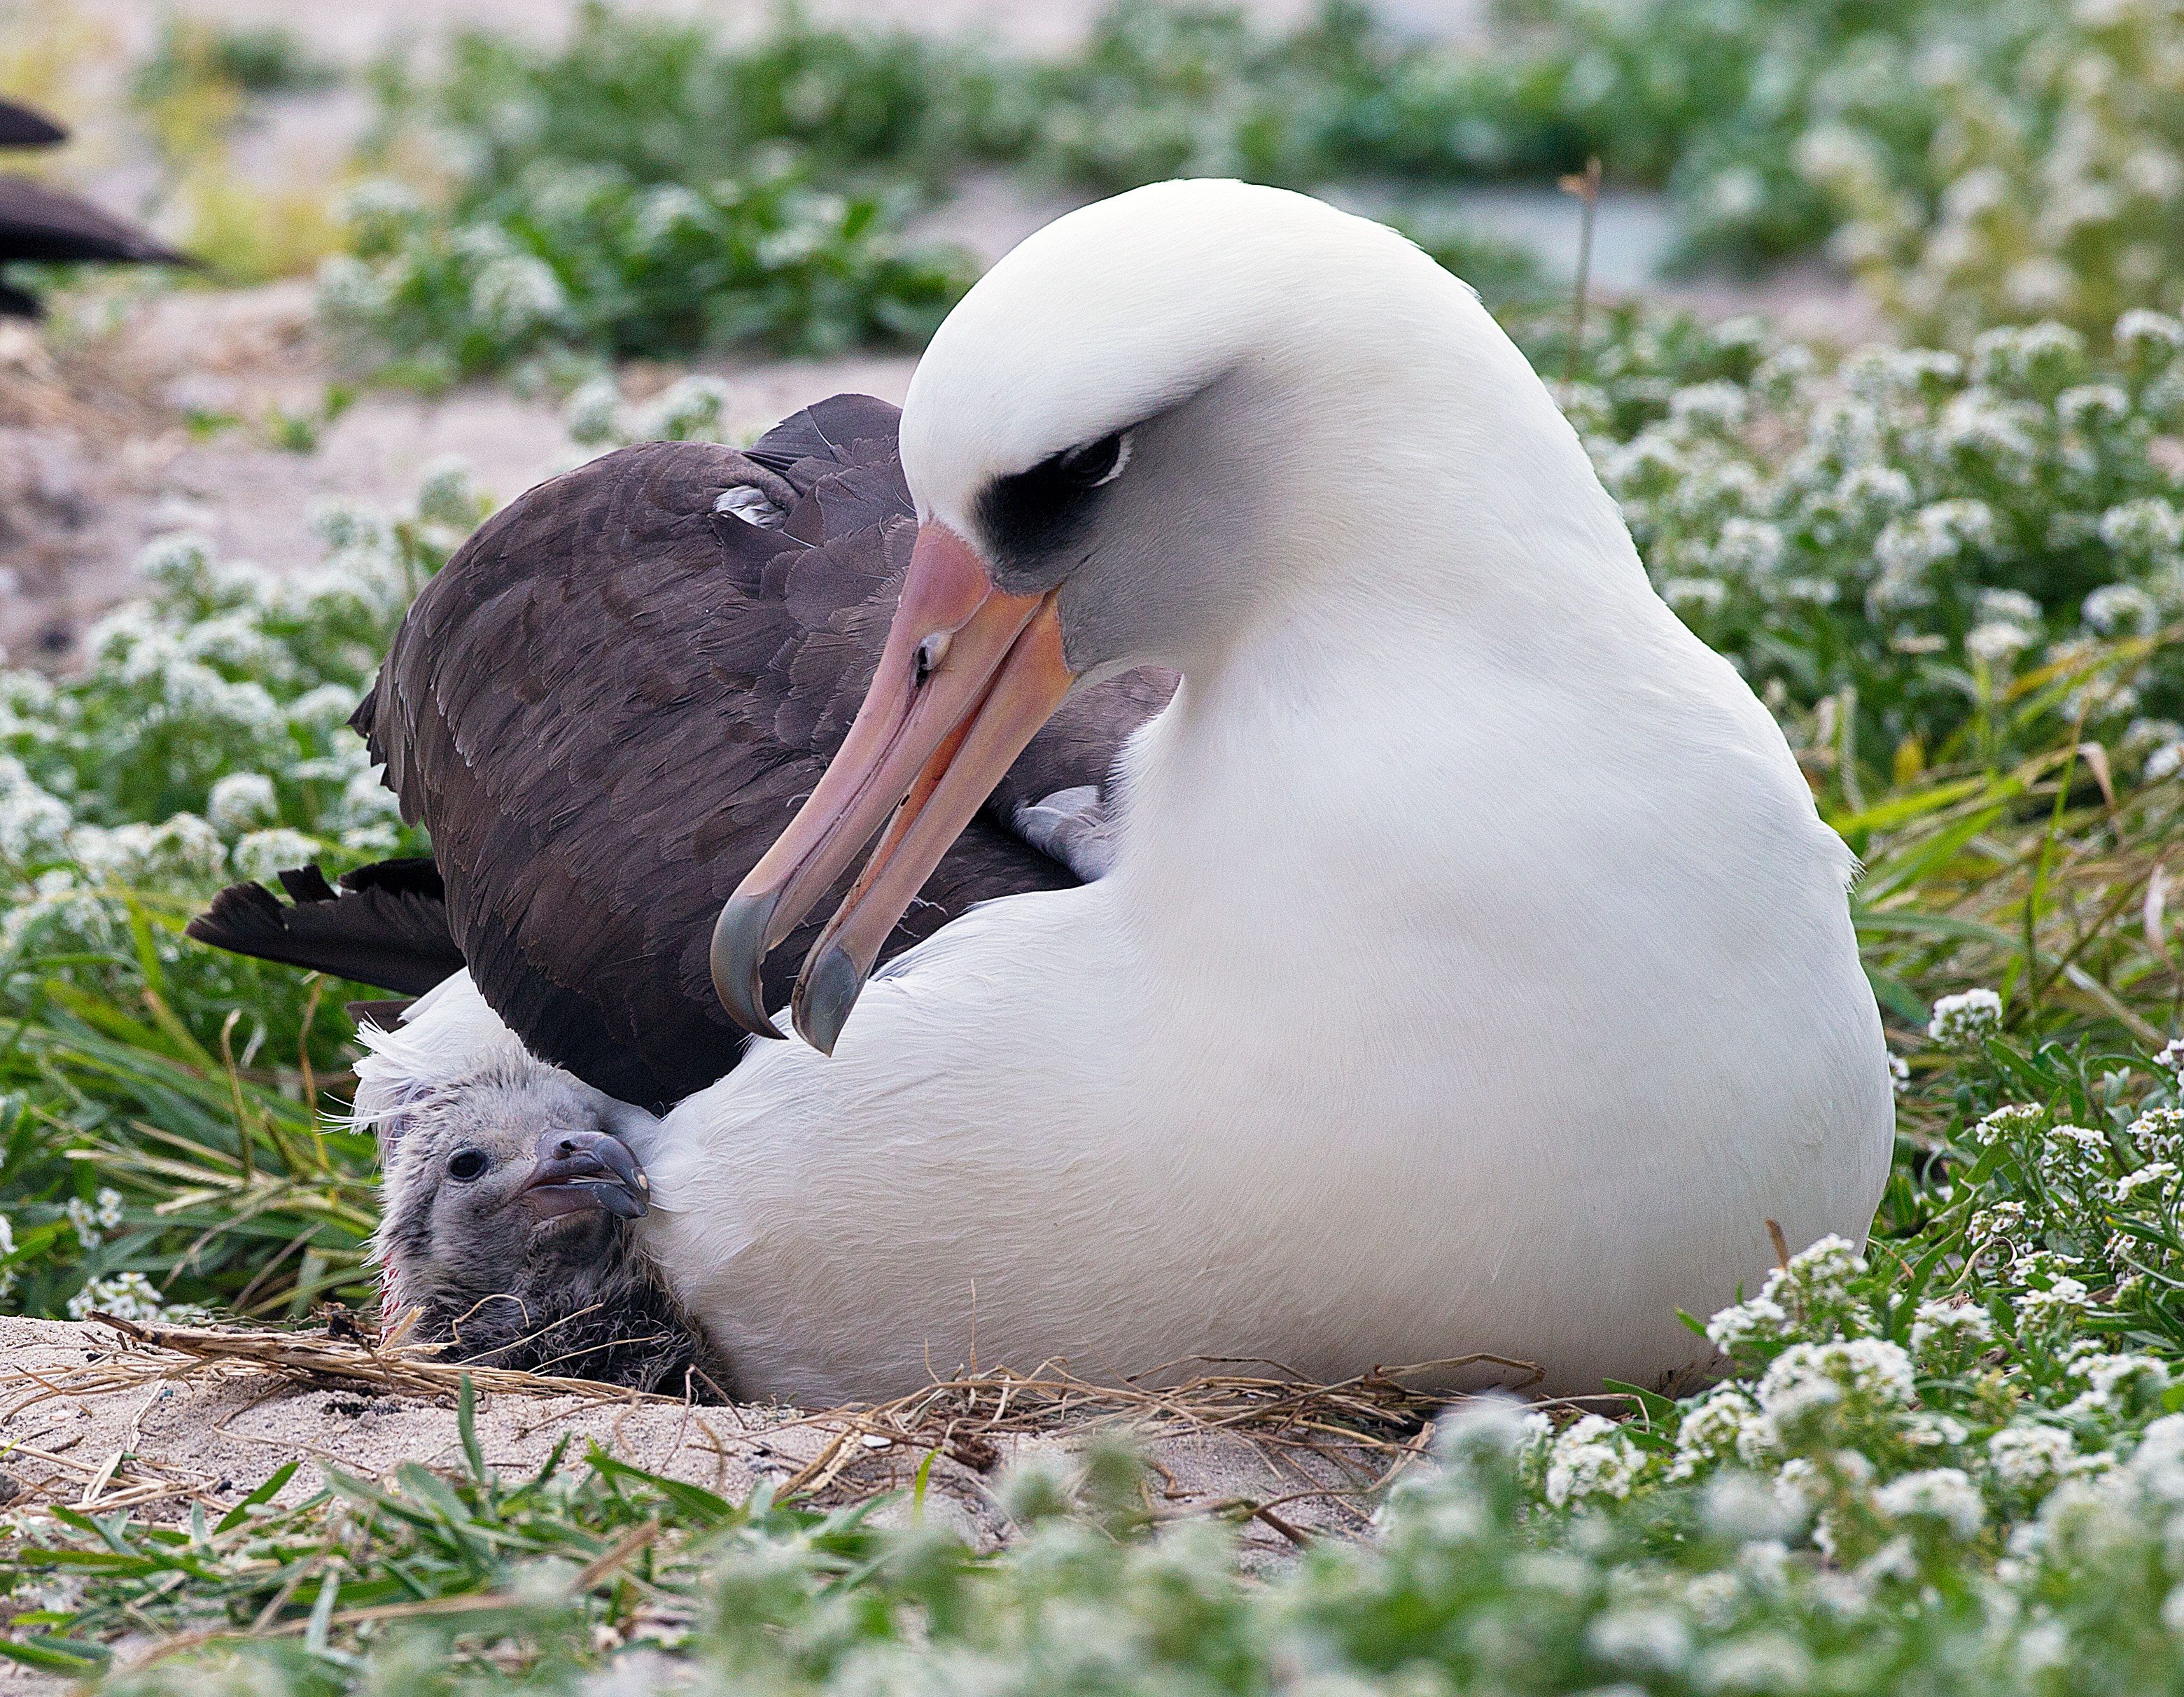 Wisdom, Laysan Albatross, and chick in 2014. Photo by weedmandan via birdshare